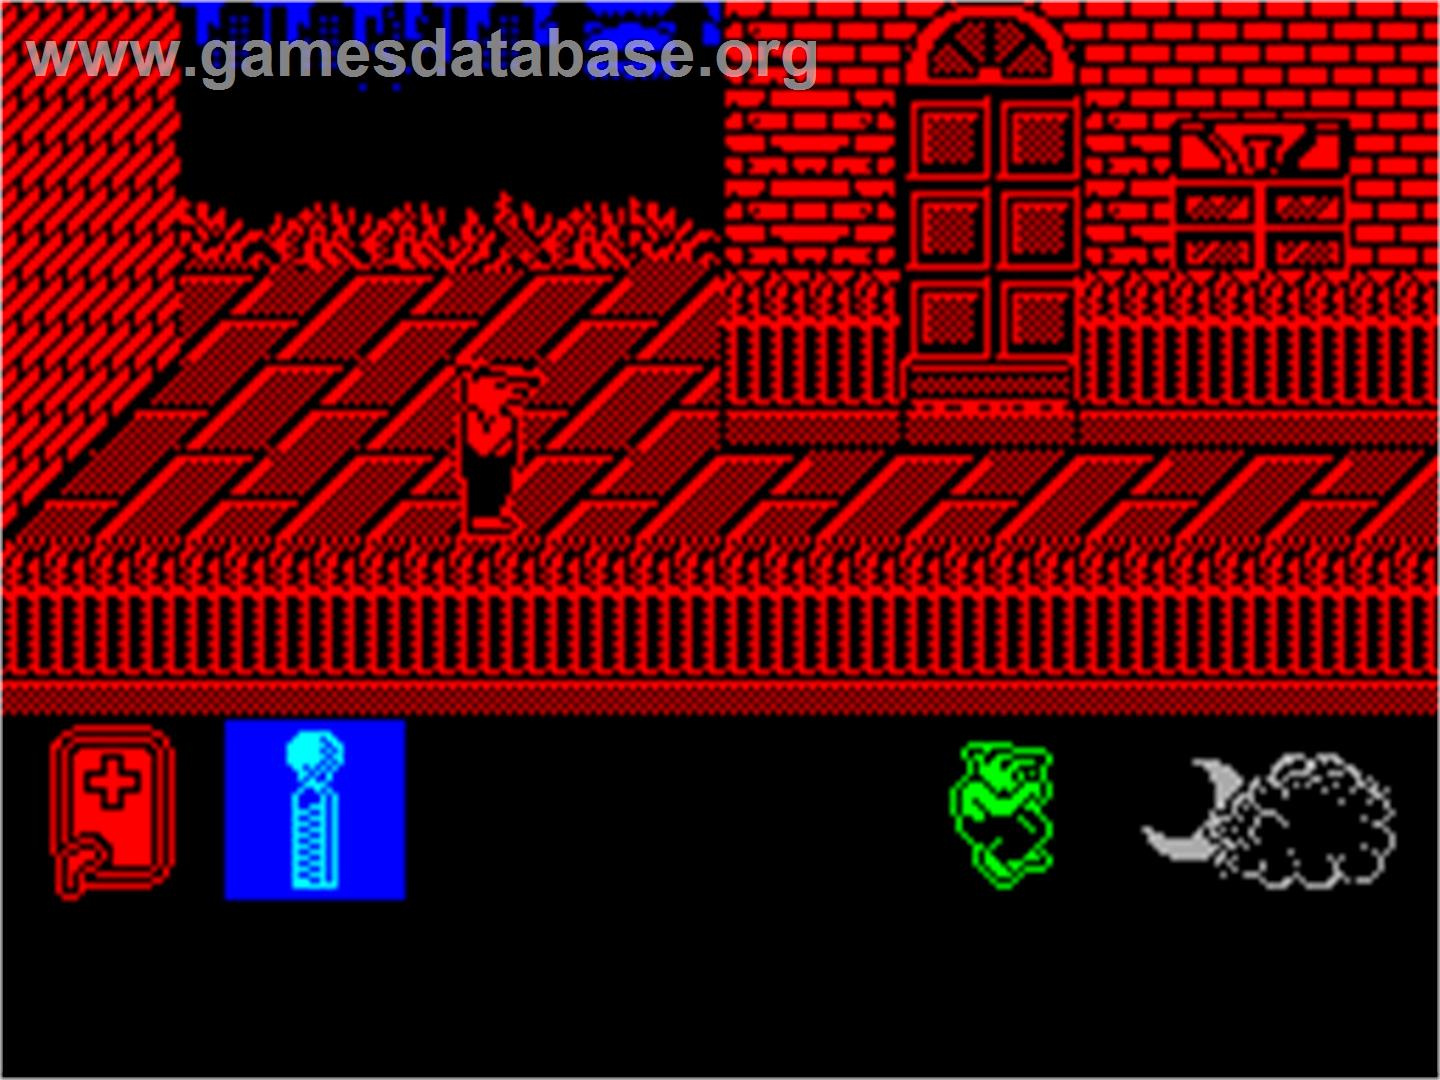 Werewolves of London - Sinclair ZX Spectrum - Artwork - In Game